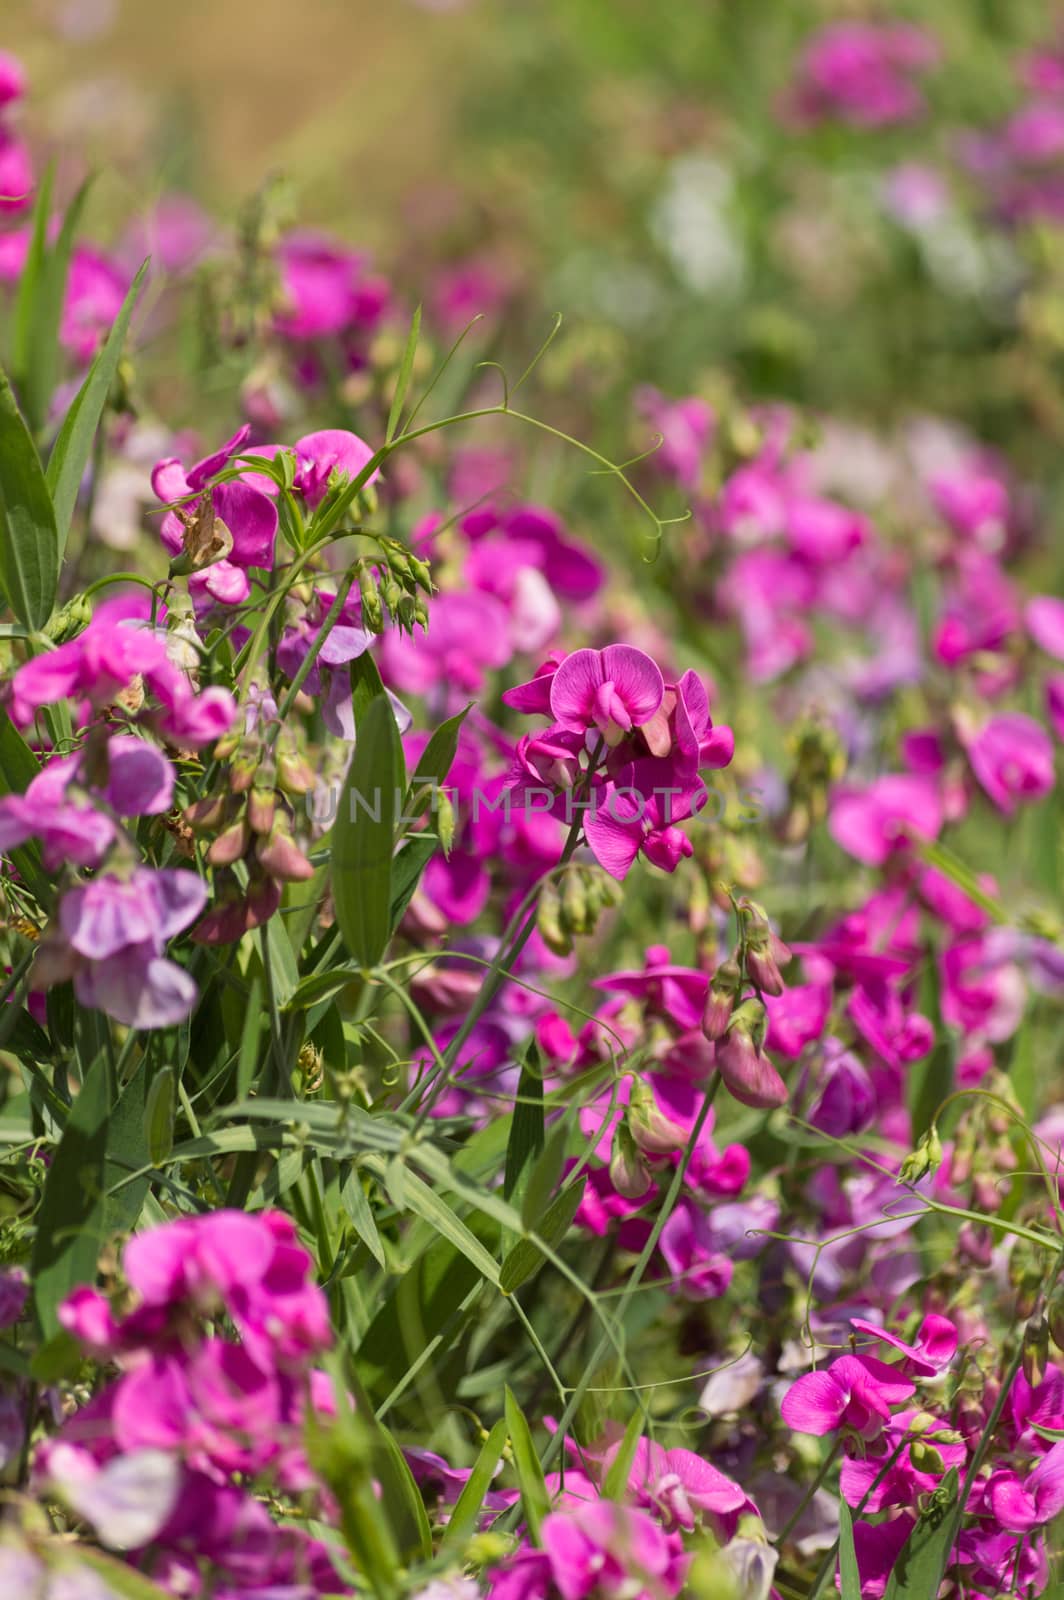 Bright pink wild vetch flowers in the summer sunshine